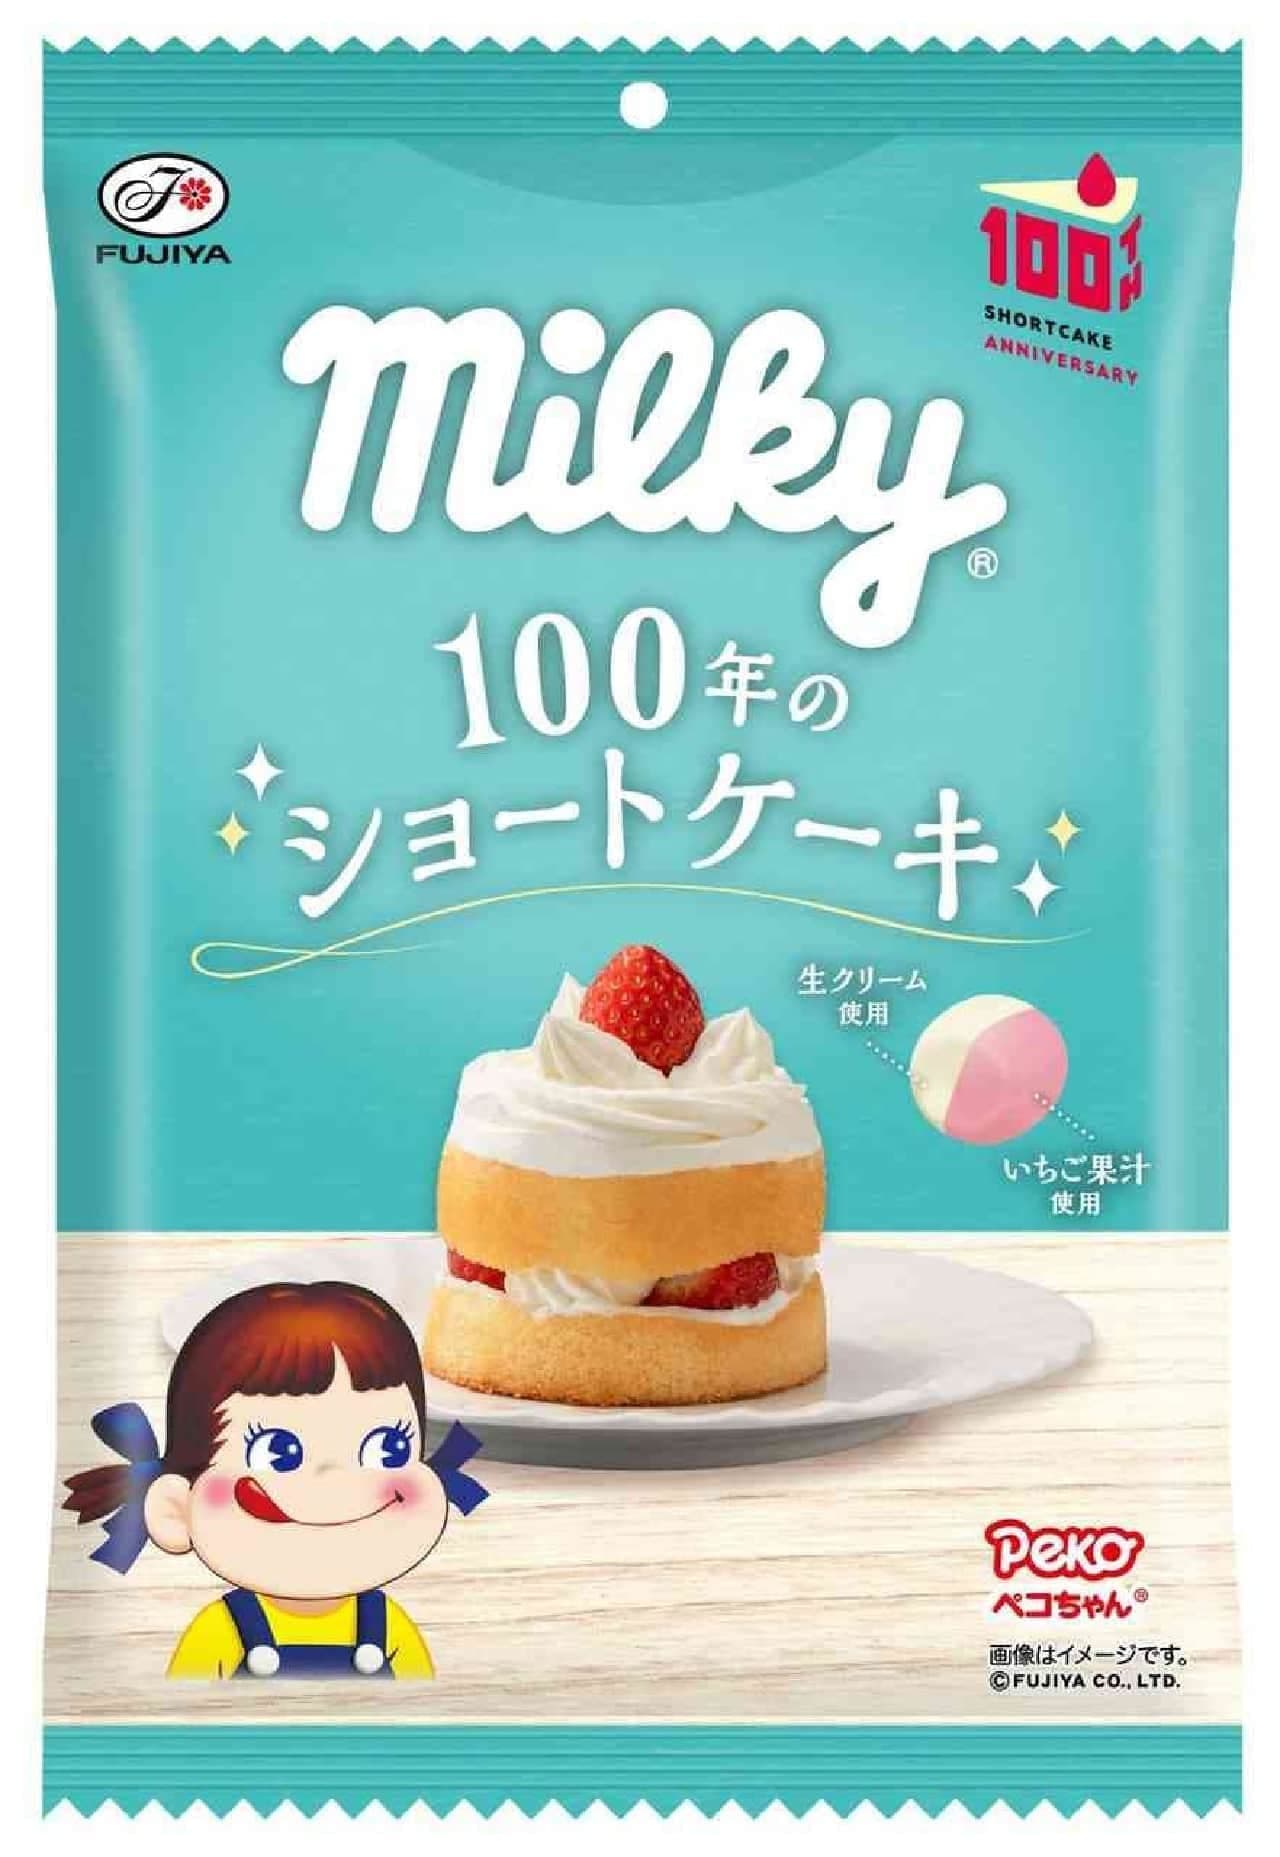 Milky (100 year old shortcake) bag